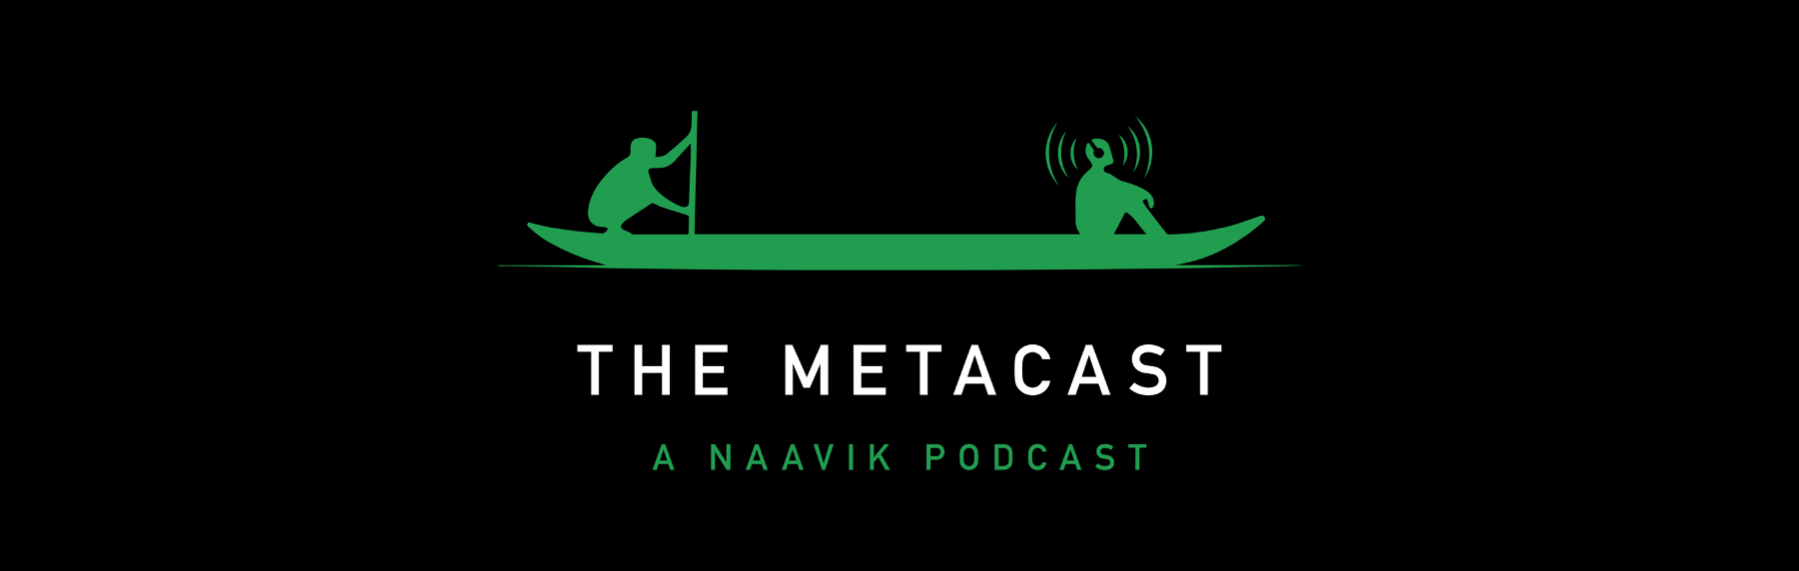 Naavik Metacast Logo Black BG.png